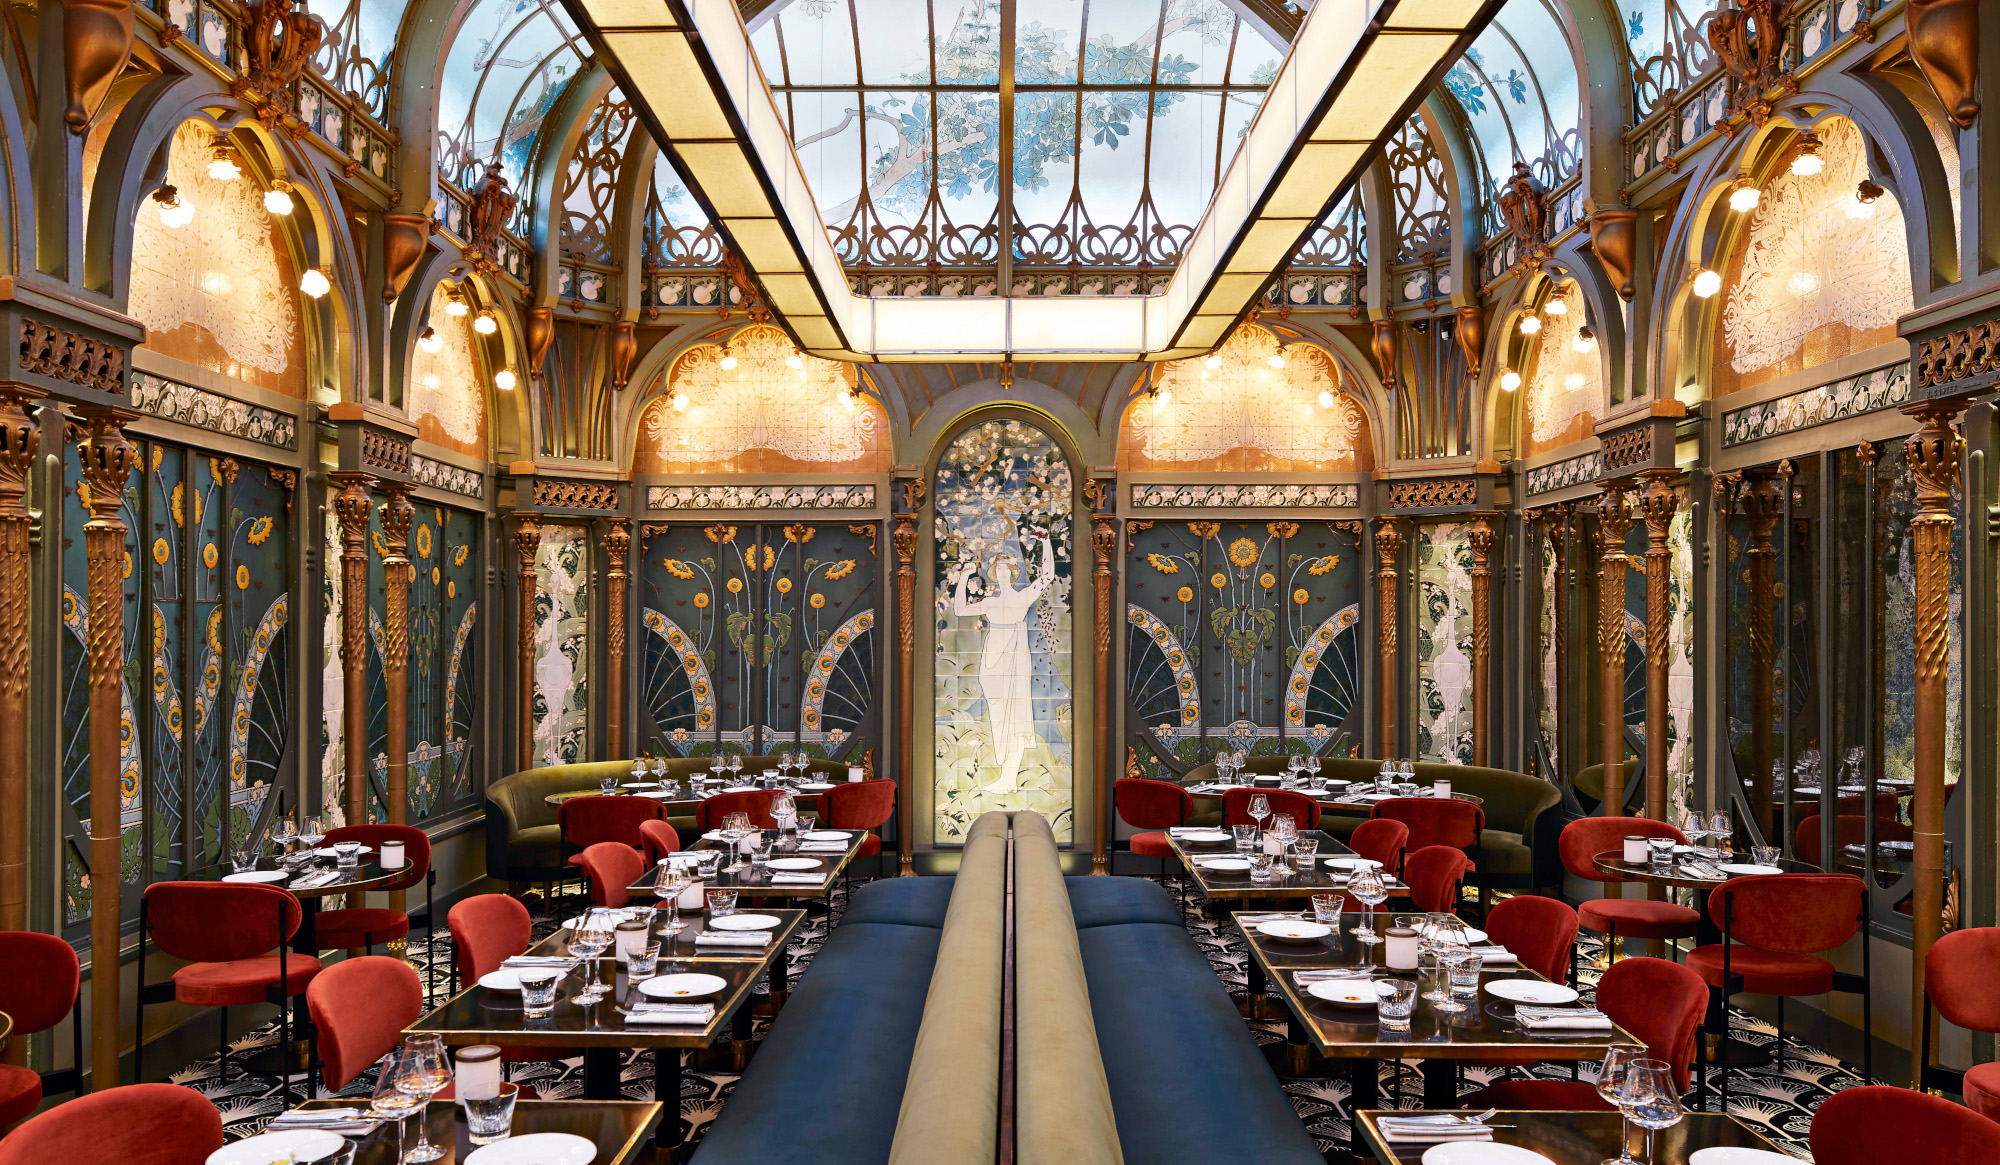 Humbert & Poyet: Beefbar Paris, restaurant, Paris, France, 2018.Francis Amiand, courtesy of Humbert & Poyet